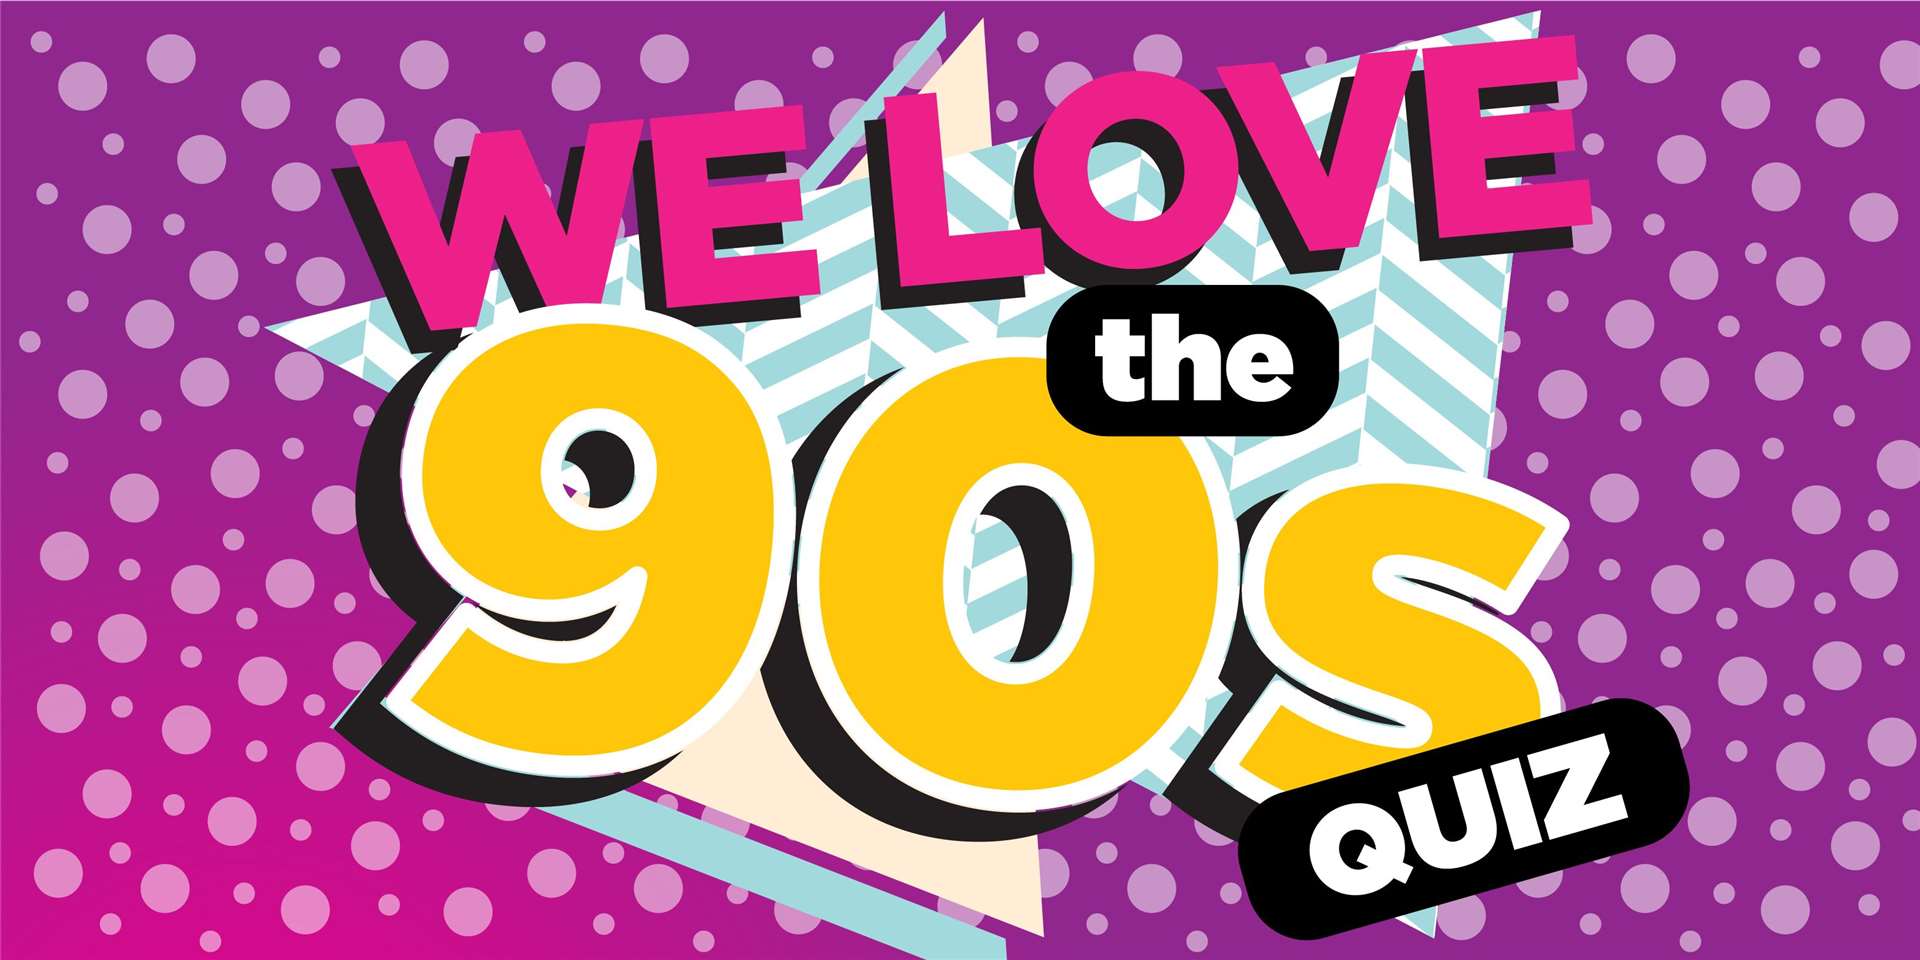 We Love the 90s quiz